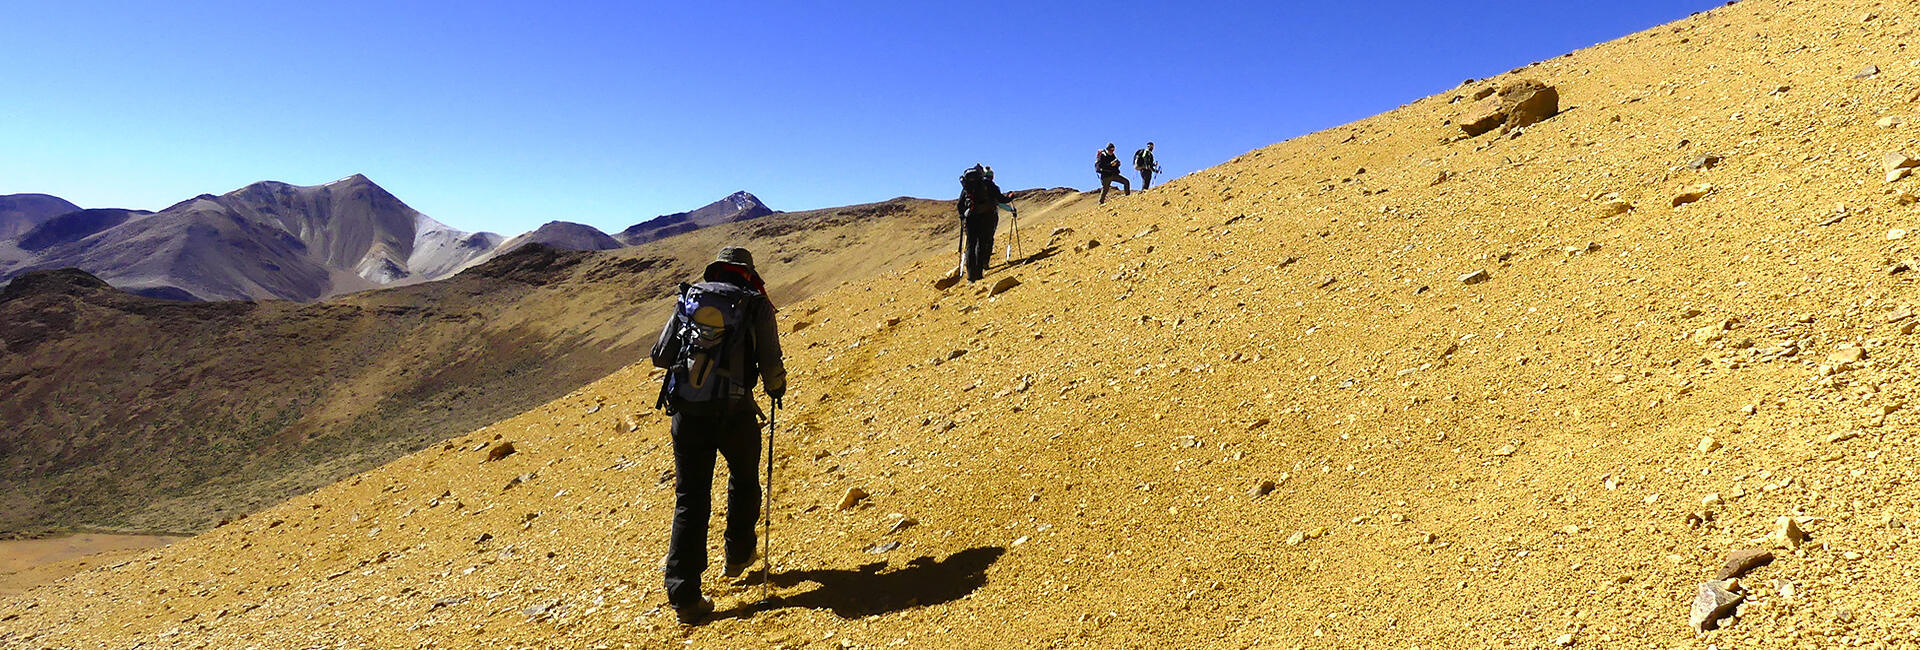 Trekking at Suri Plaza, Altiplano